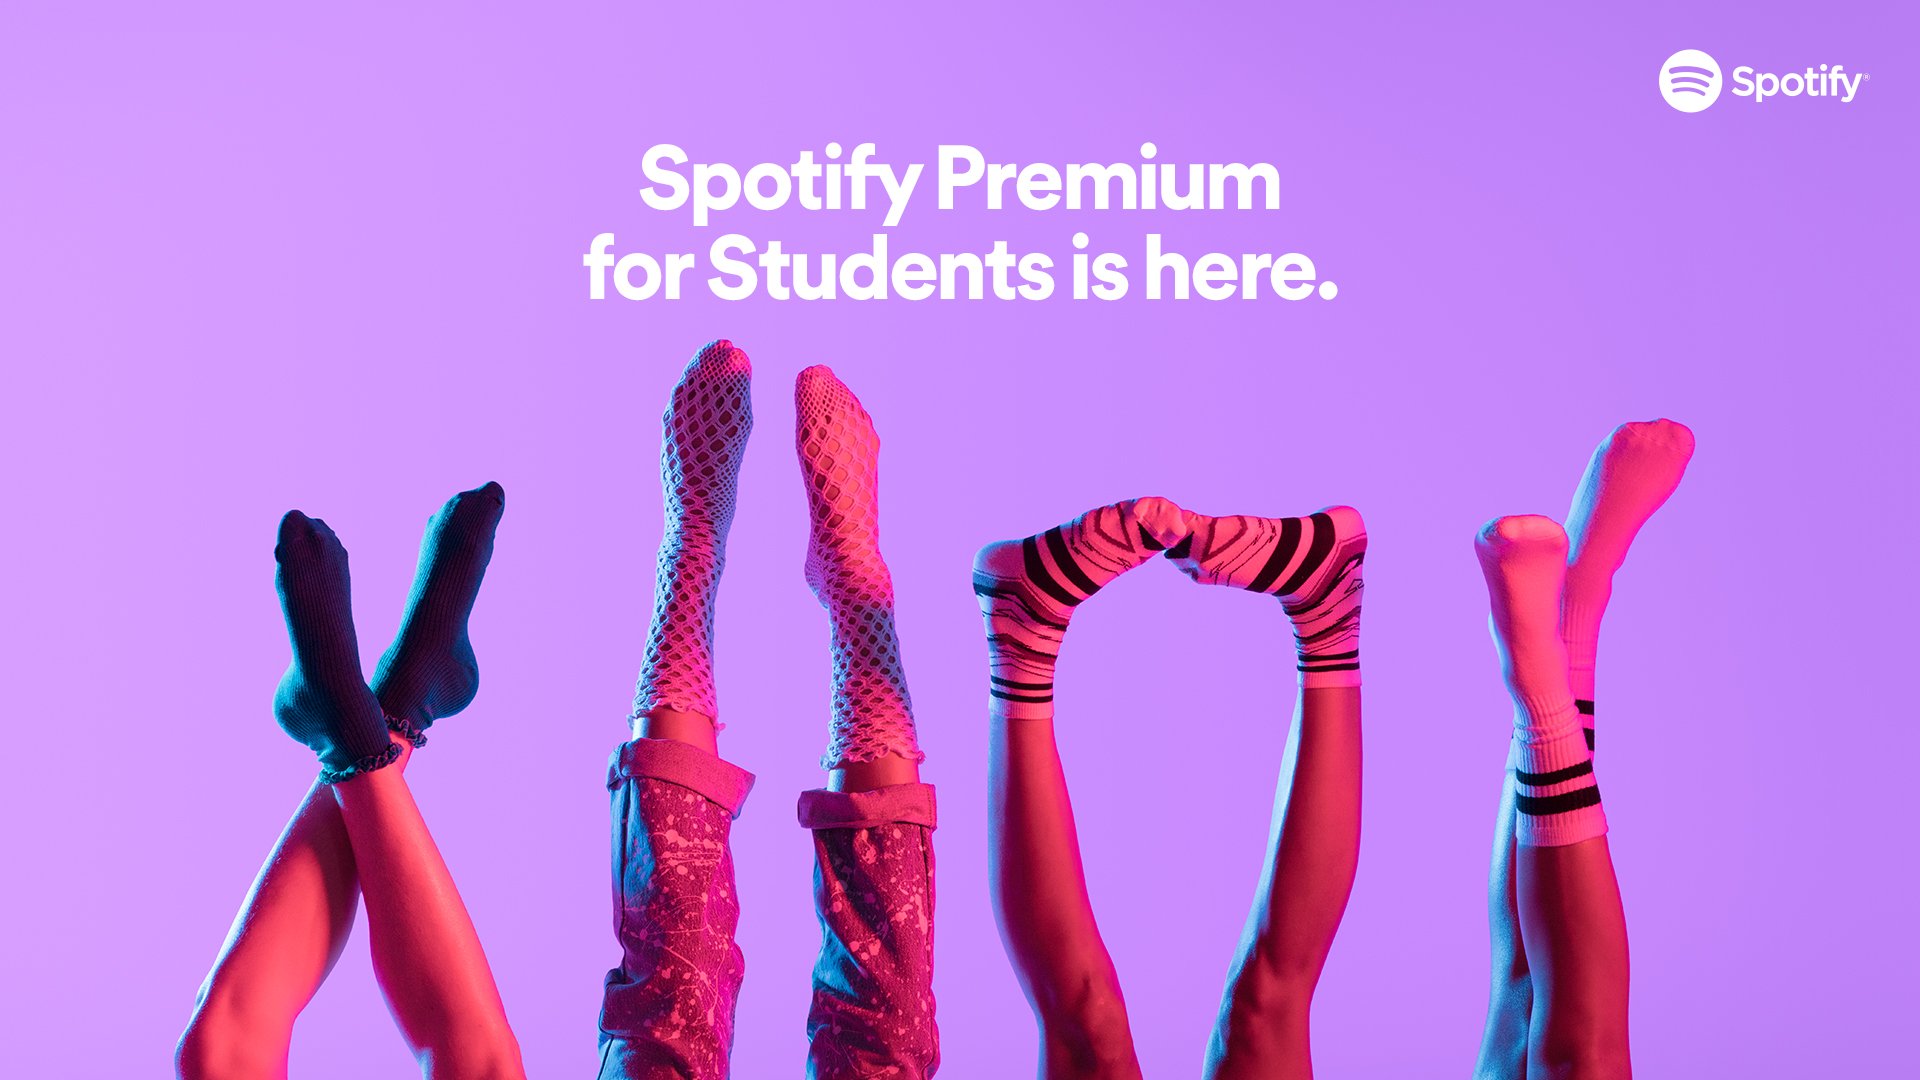 Desktop] Student Discount in Switzerland - The Spotify Community